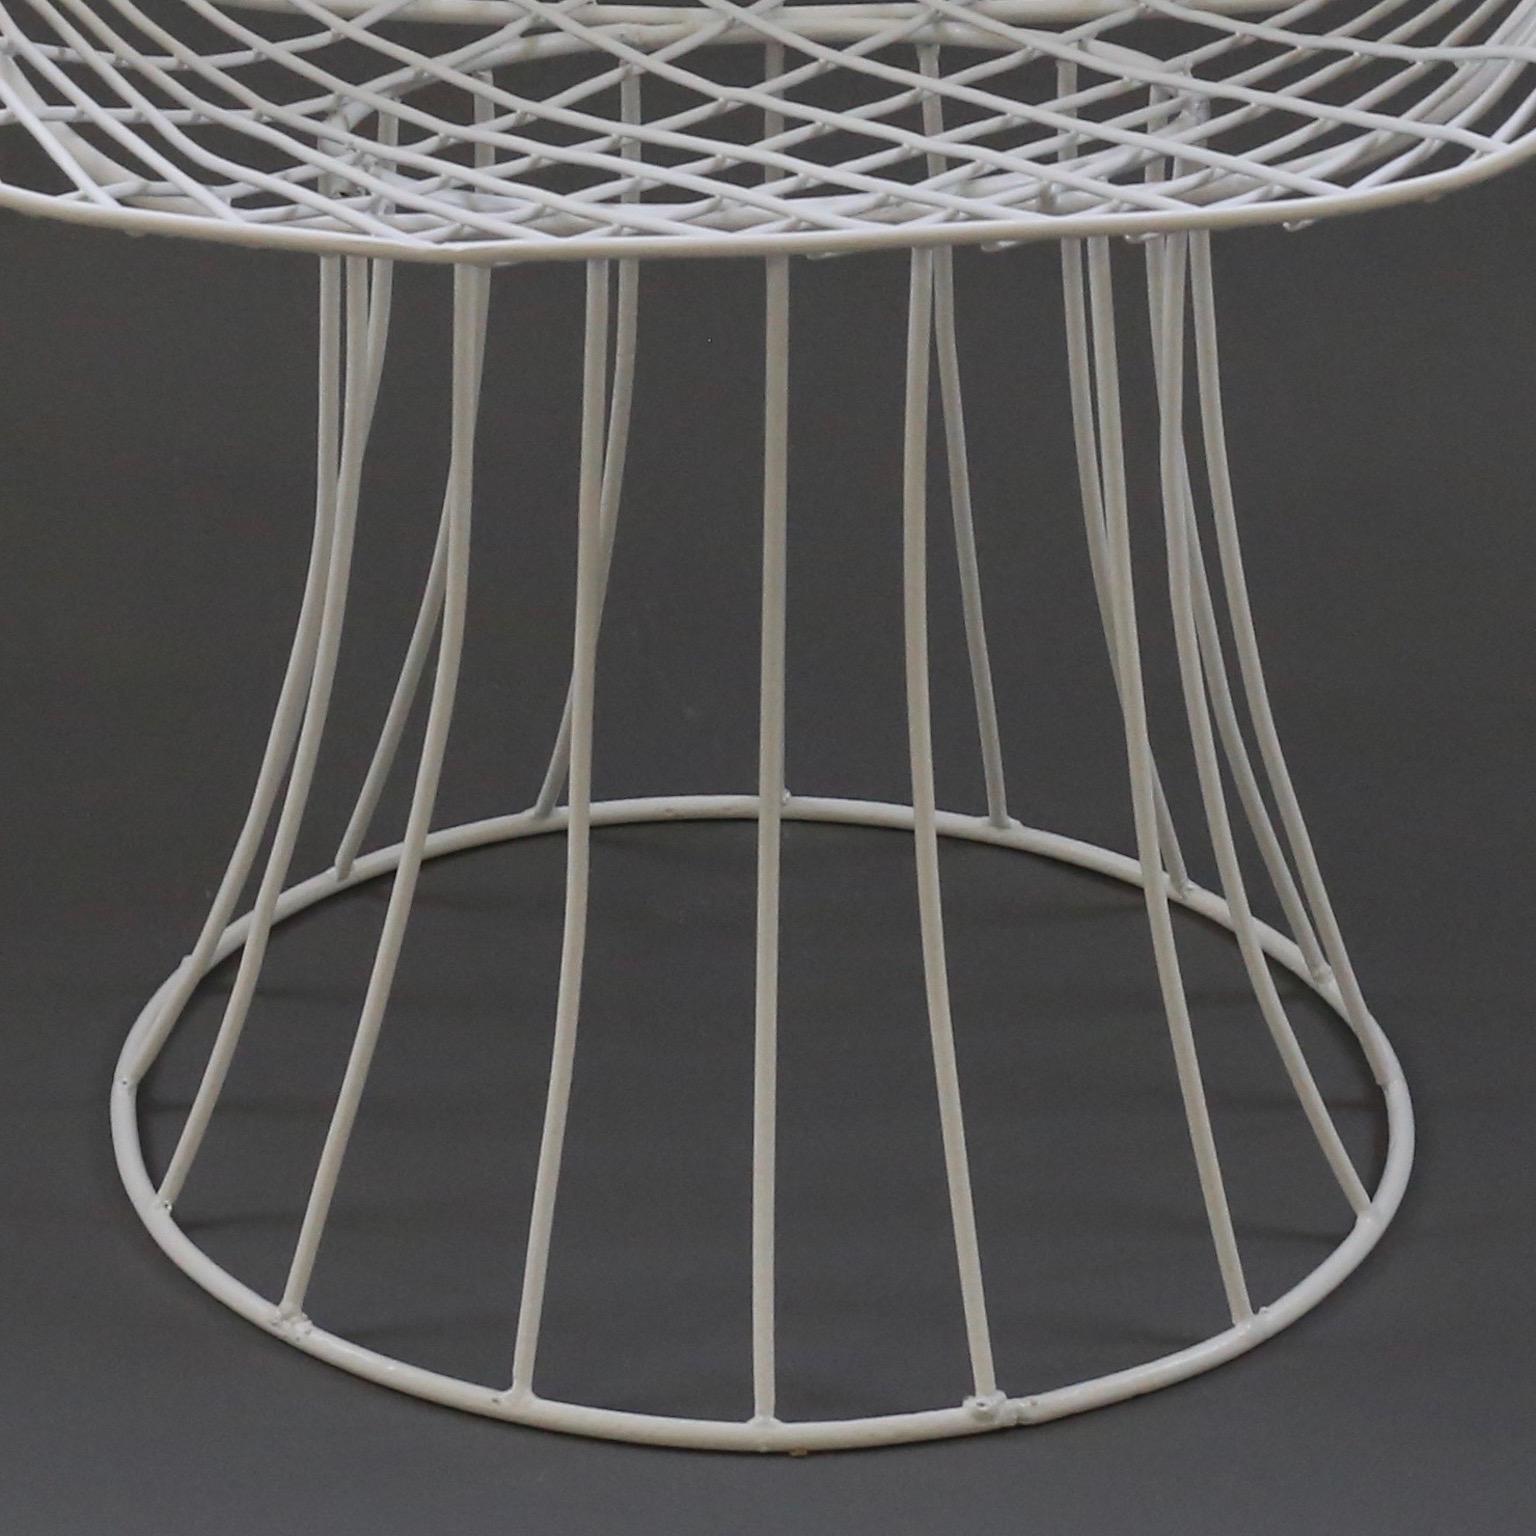 Powder-Coated Wire Framed Harry Bertoia Indoor/Outdoor Chairs